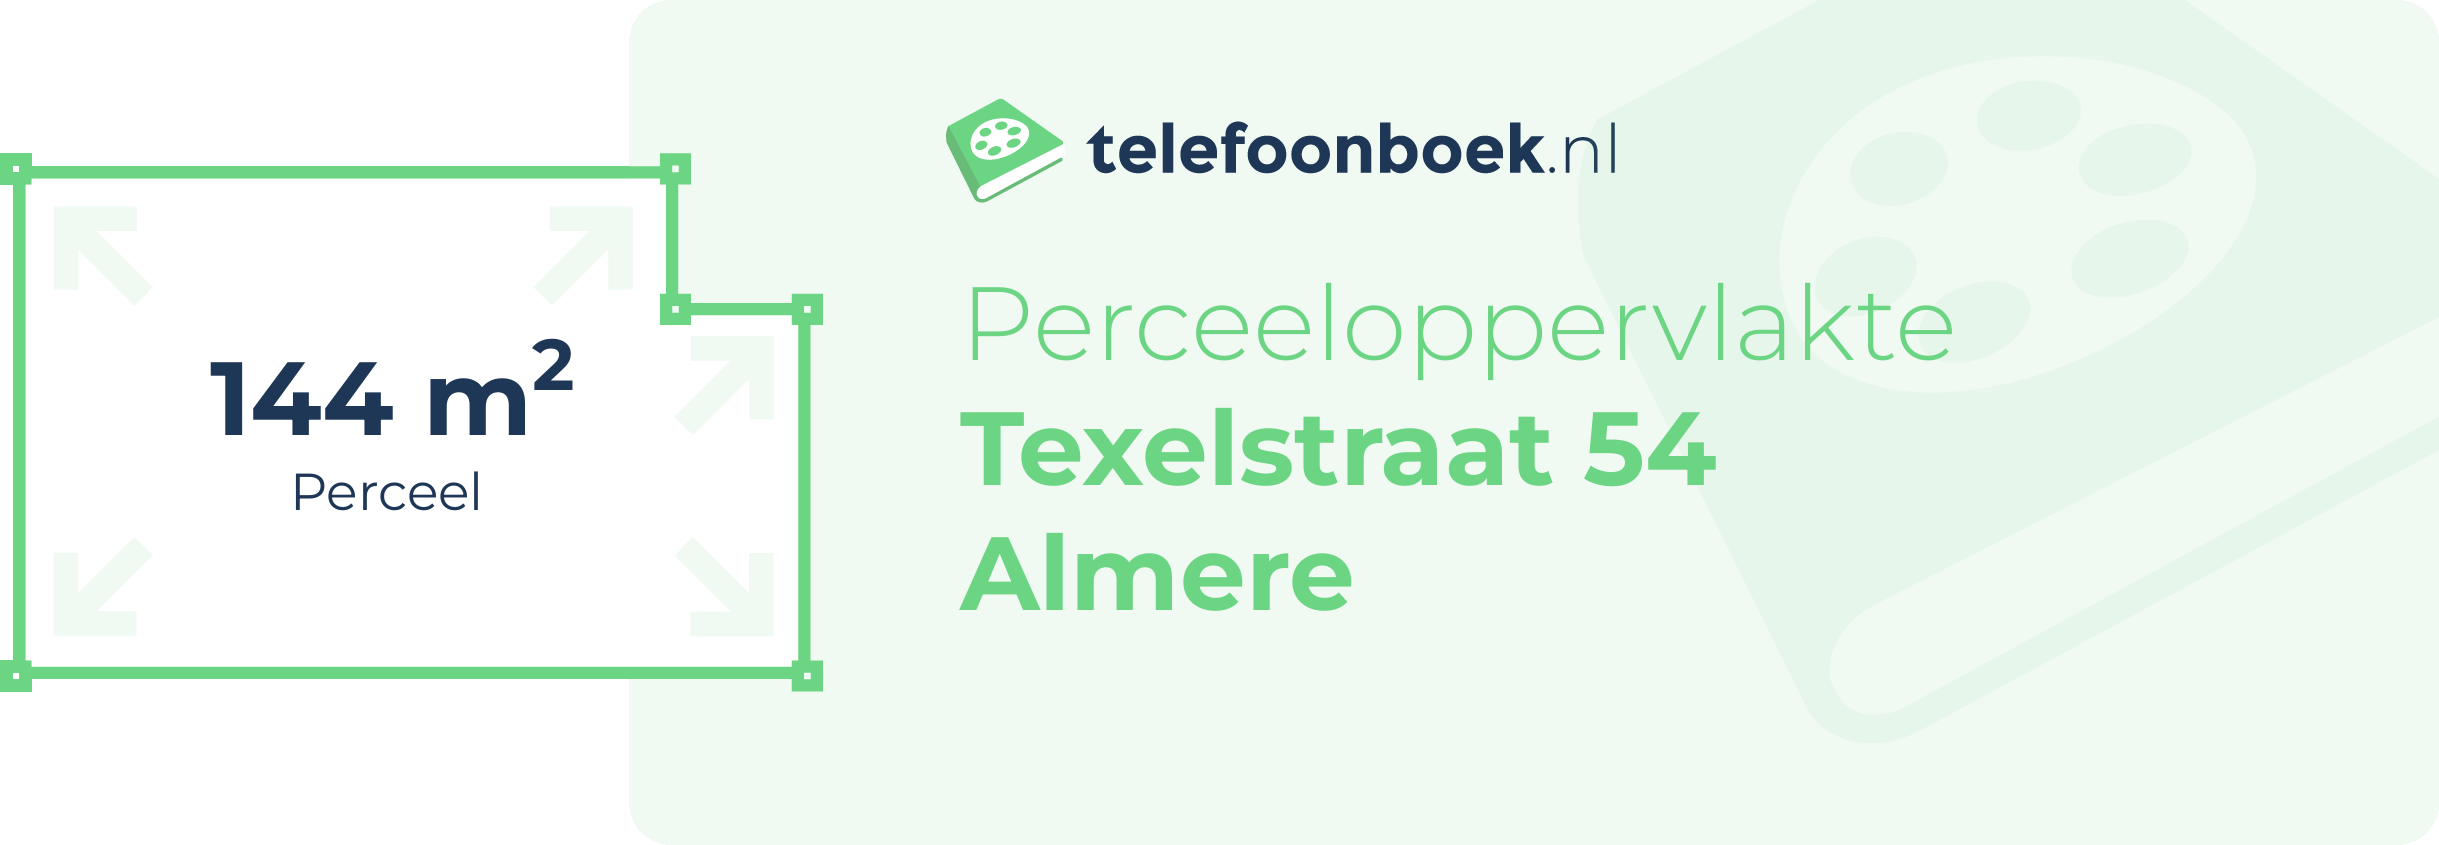 Perceeloppervlakte Texelstraat 54 Almere